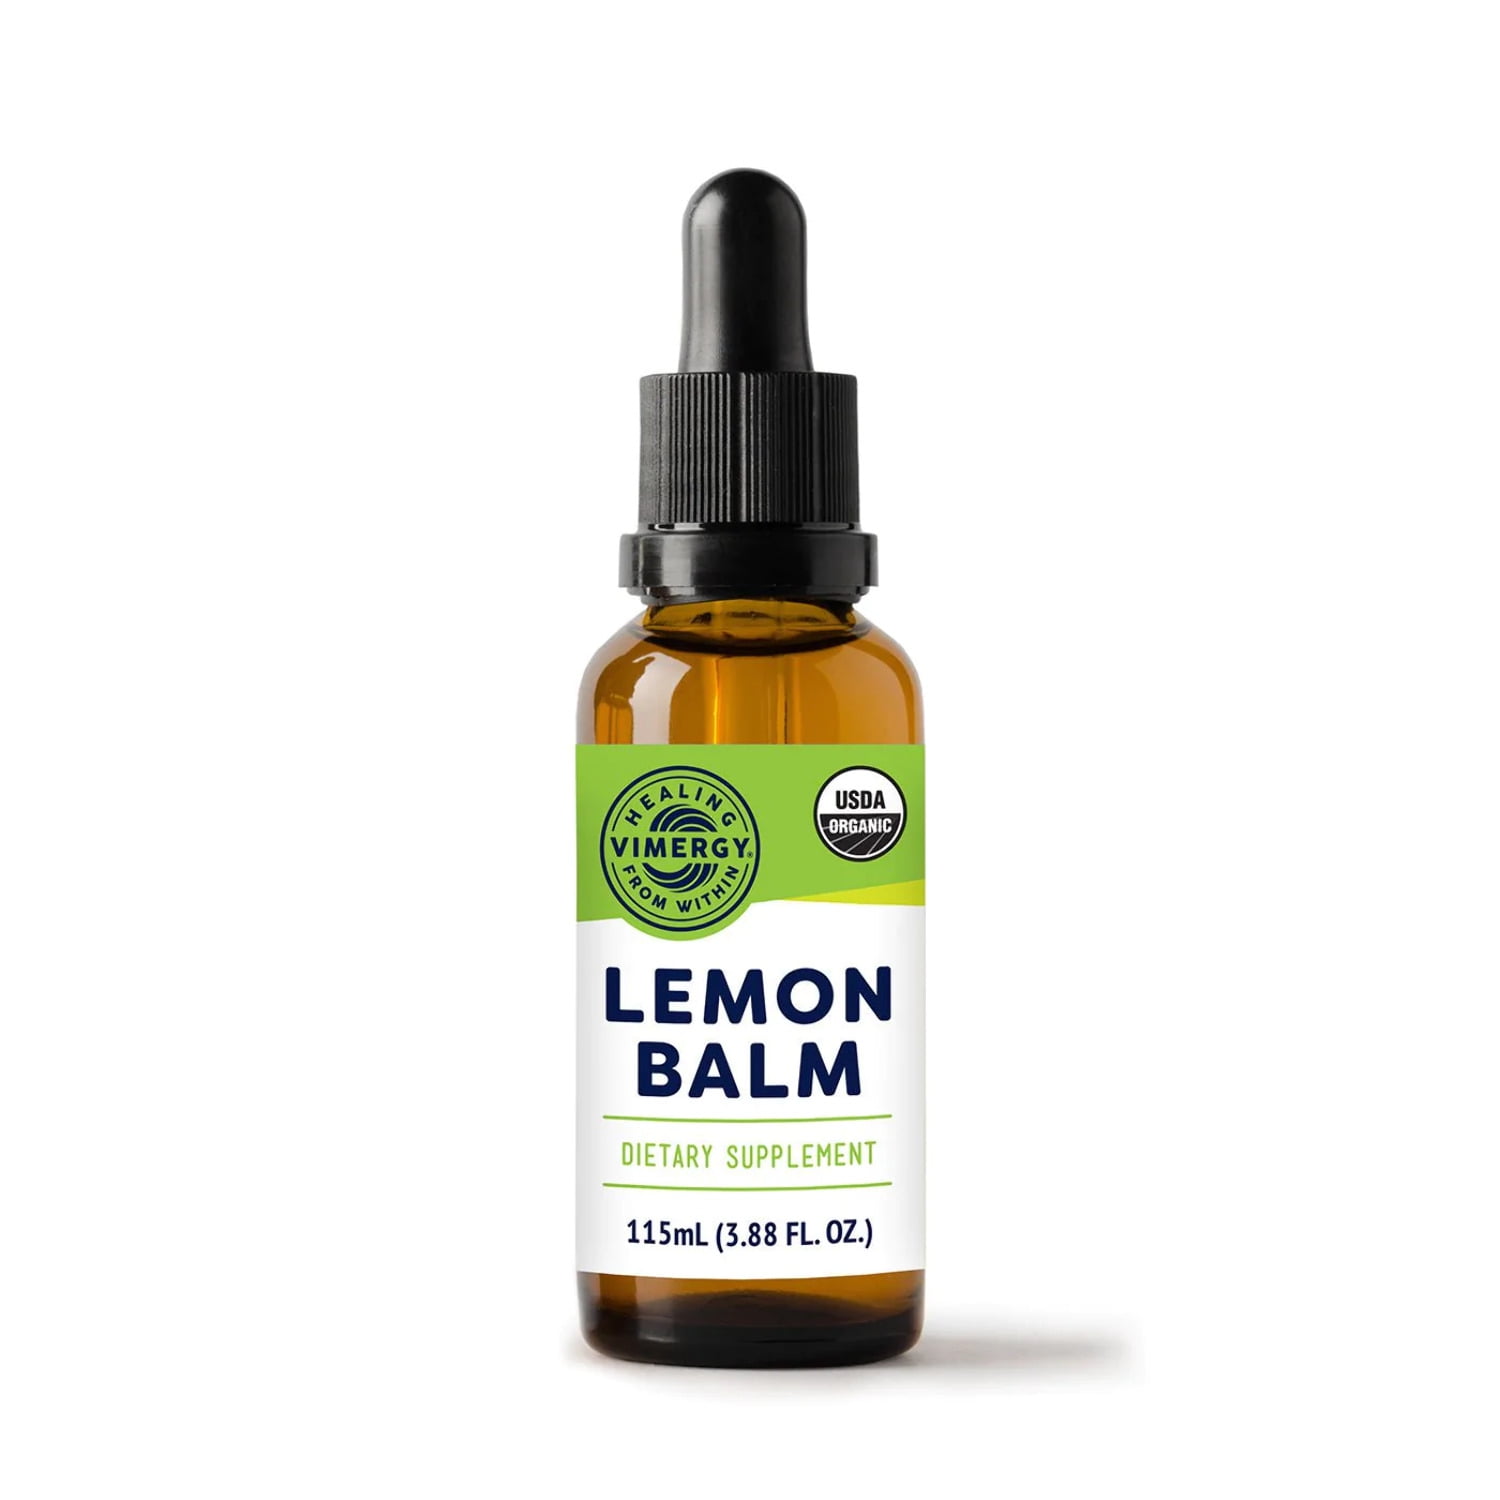 Vimergy USDA Organic Lemon Balm Extract, 115 Servings - Walmart.com